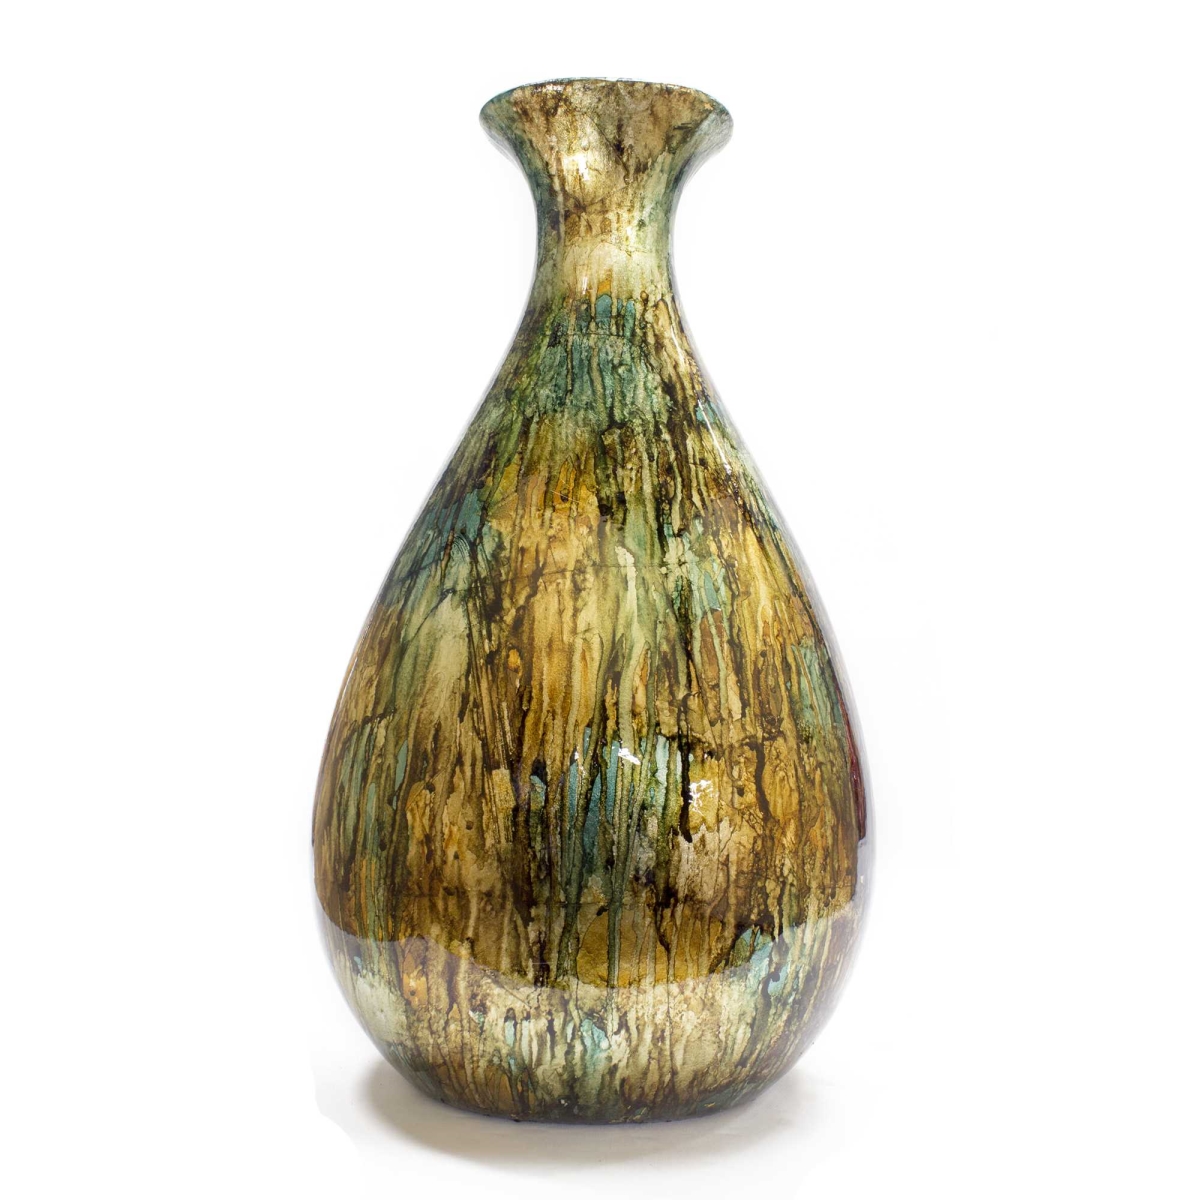 Home Roots Beddings 328631 Ceramic Floor Vase, Turquoise, Copper & Bronze - 18.5 In.